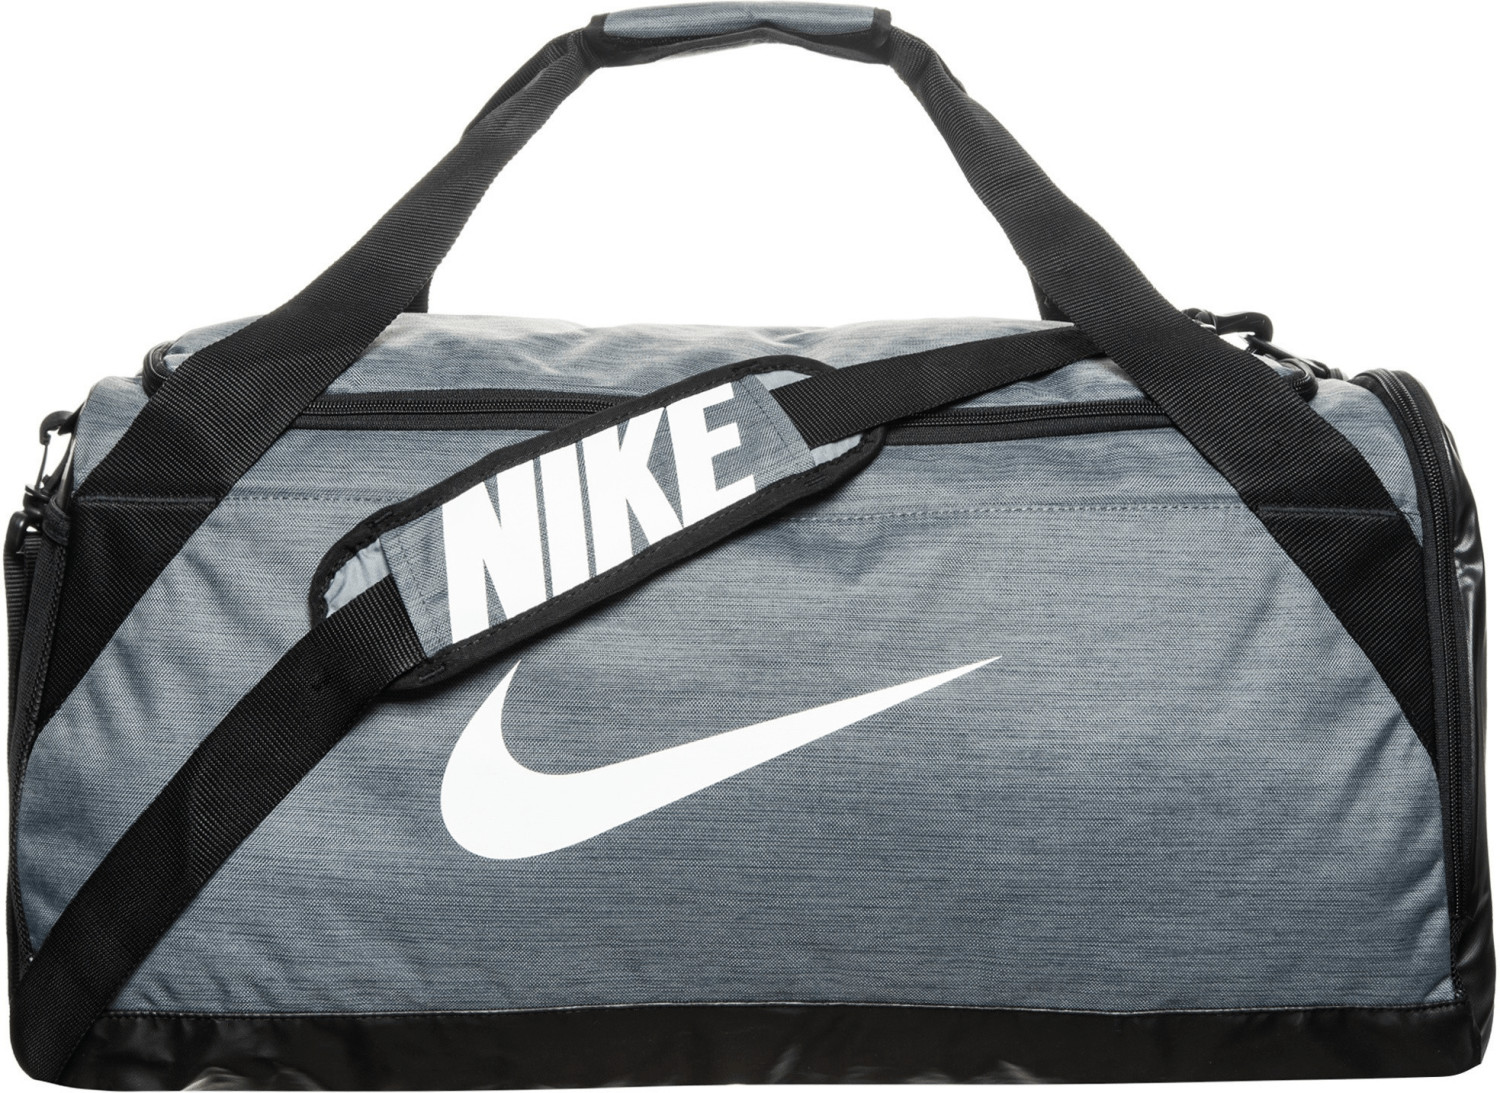 Nike Brasilia M flint grey/black/white (BA5334)